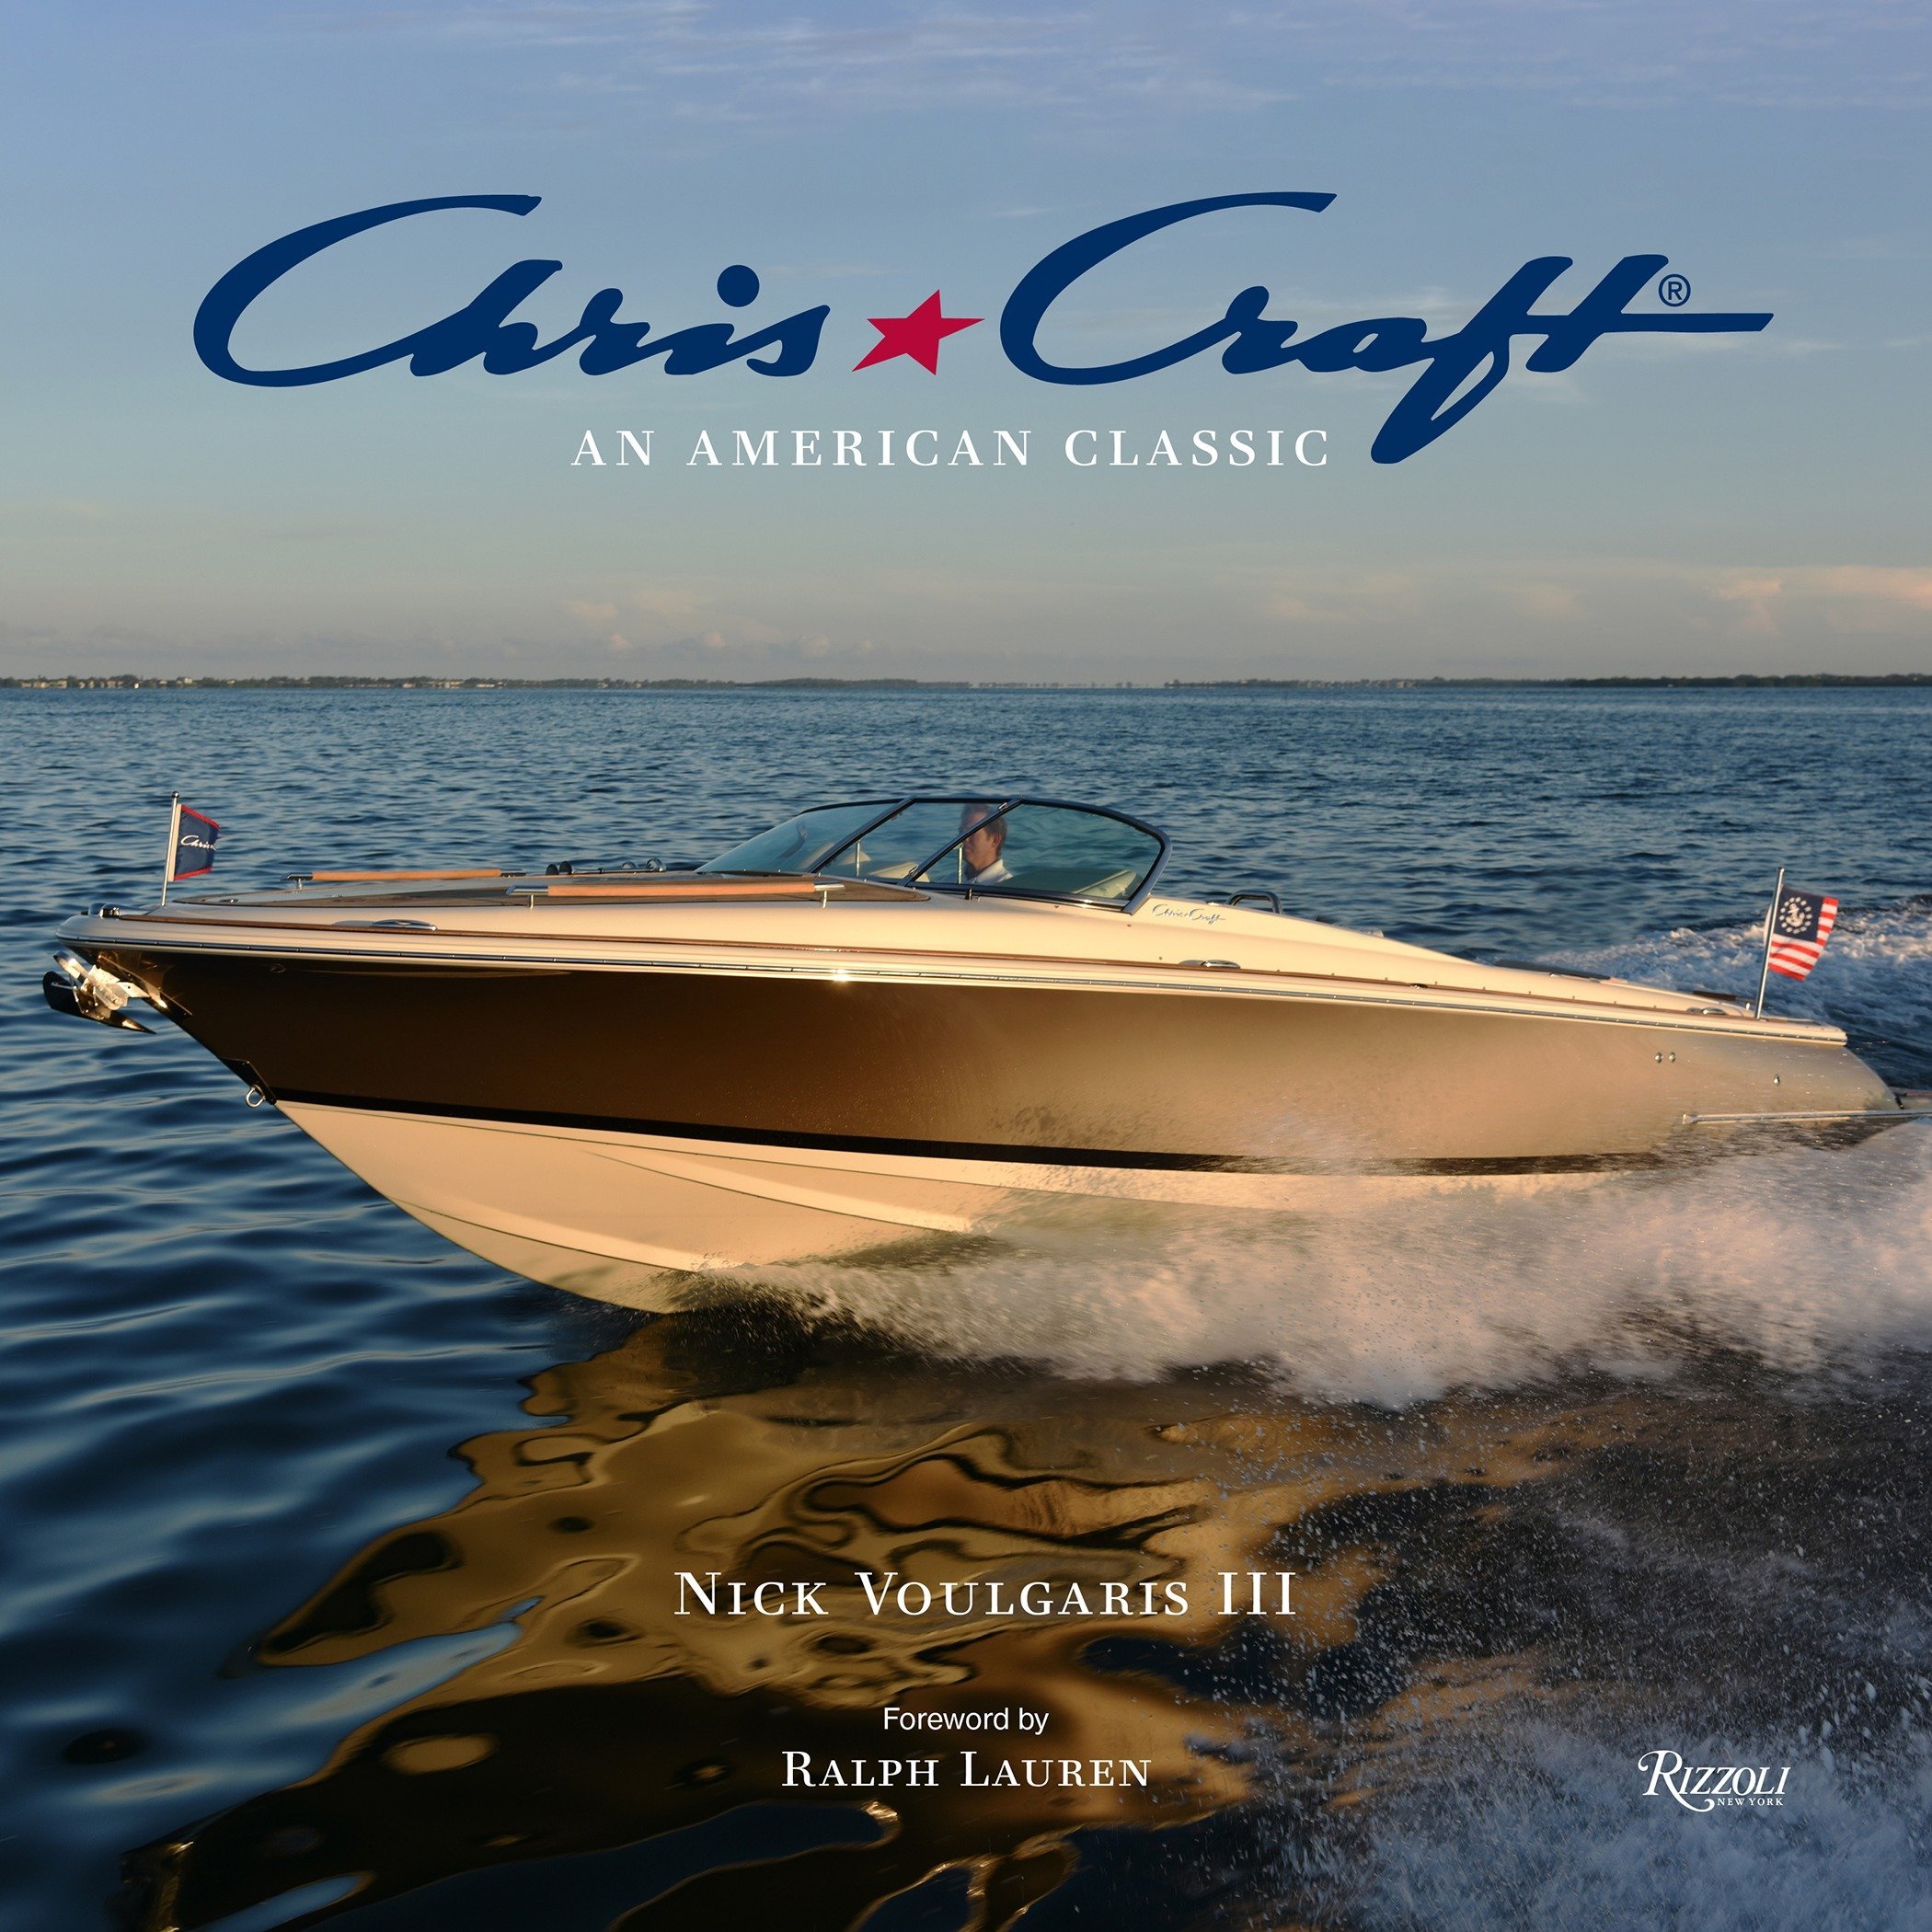 Chris-craft an american classic